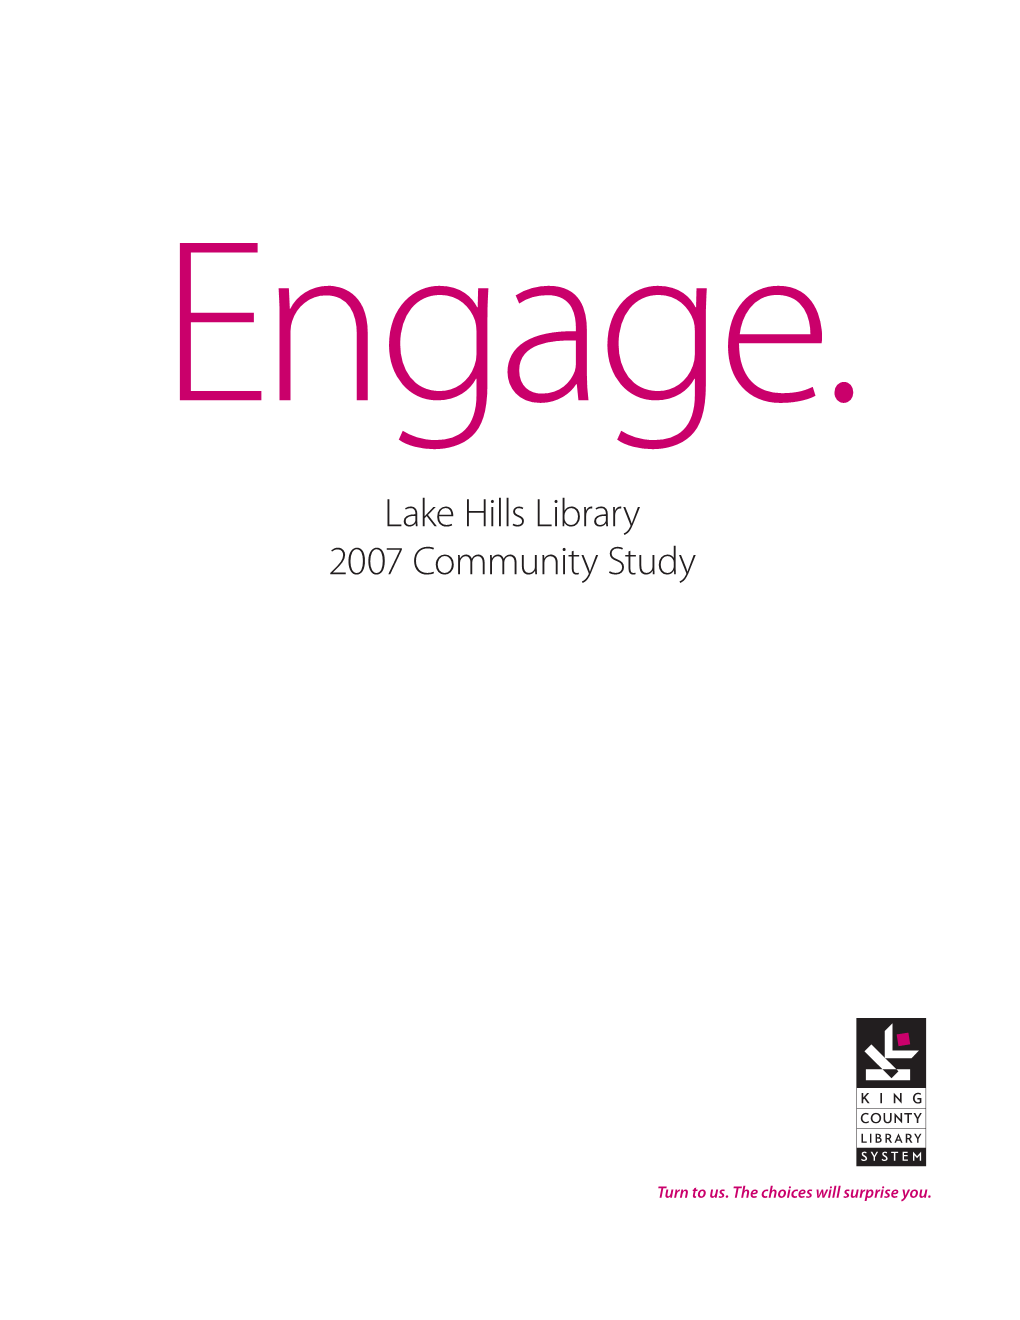 Lake Hills Library 2007 Community Study